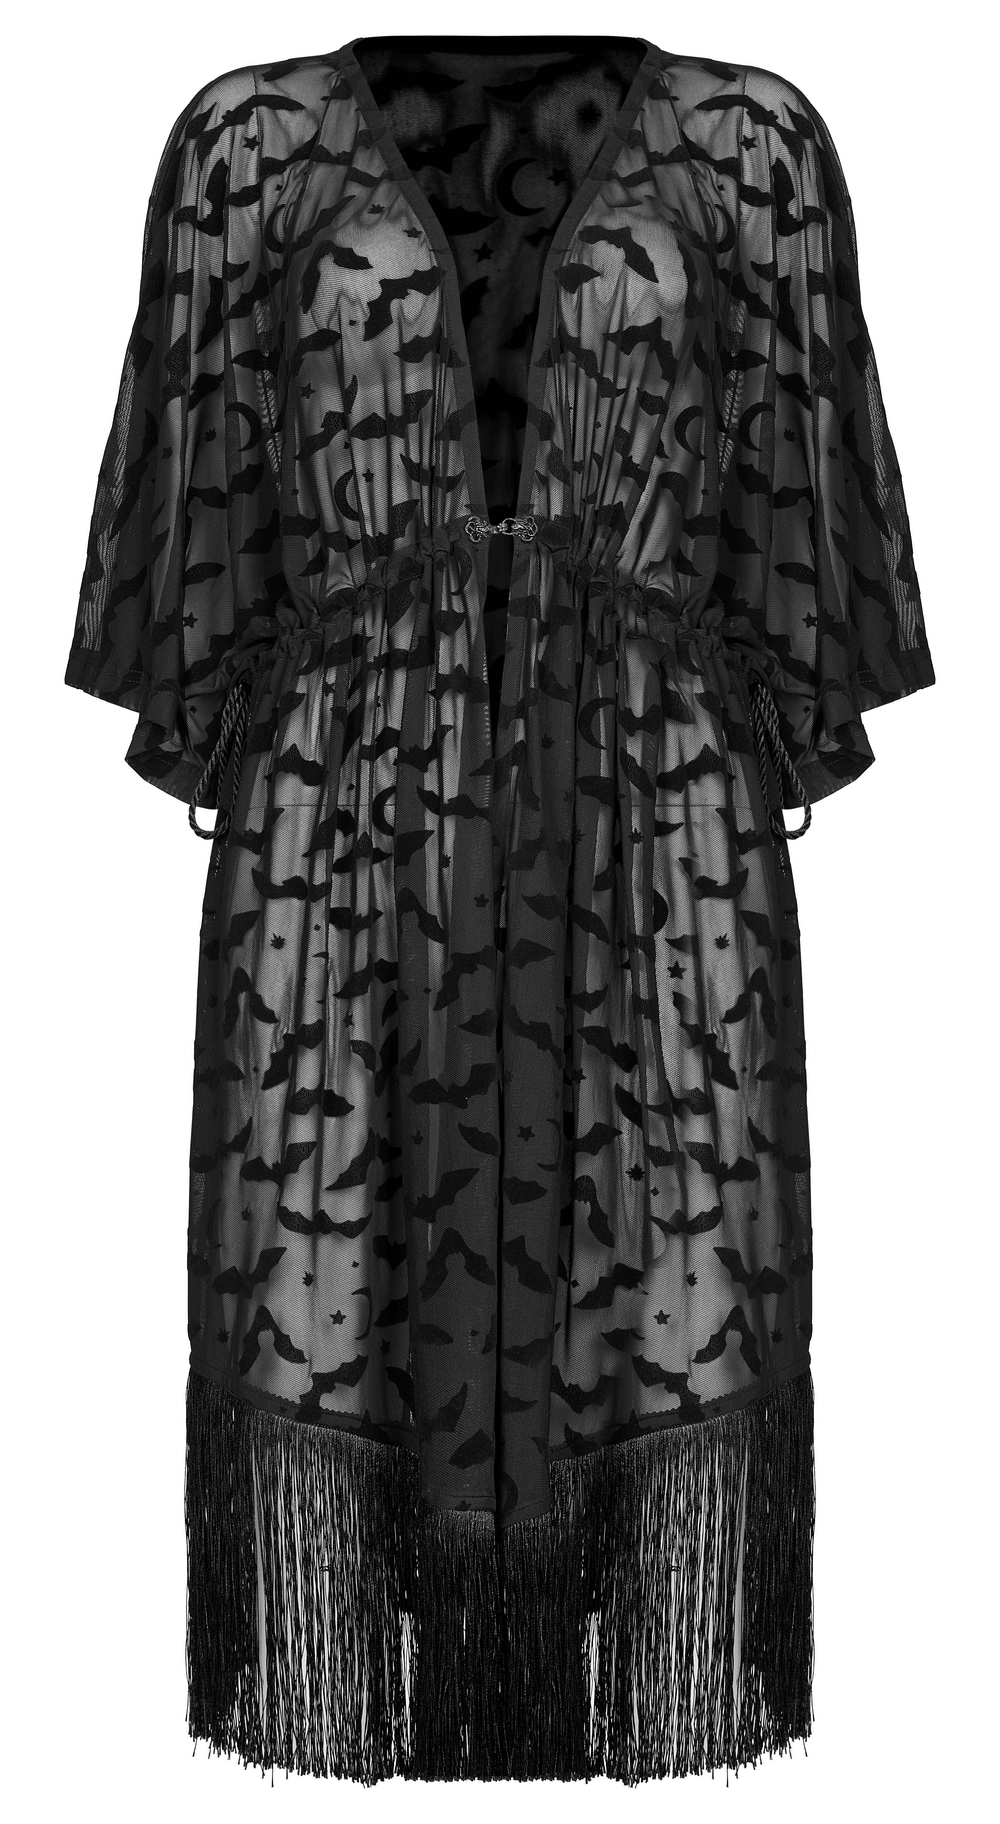 Elegant Black Lace Bat Print Kimono-Coat with Tassels